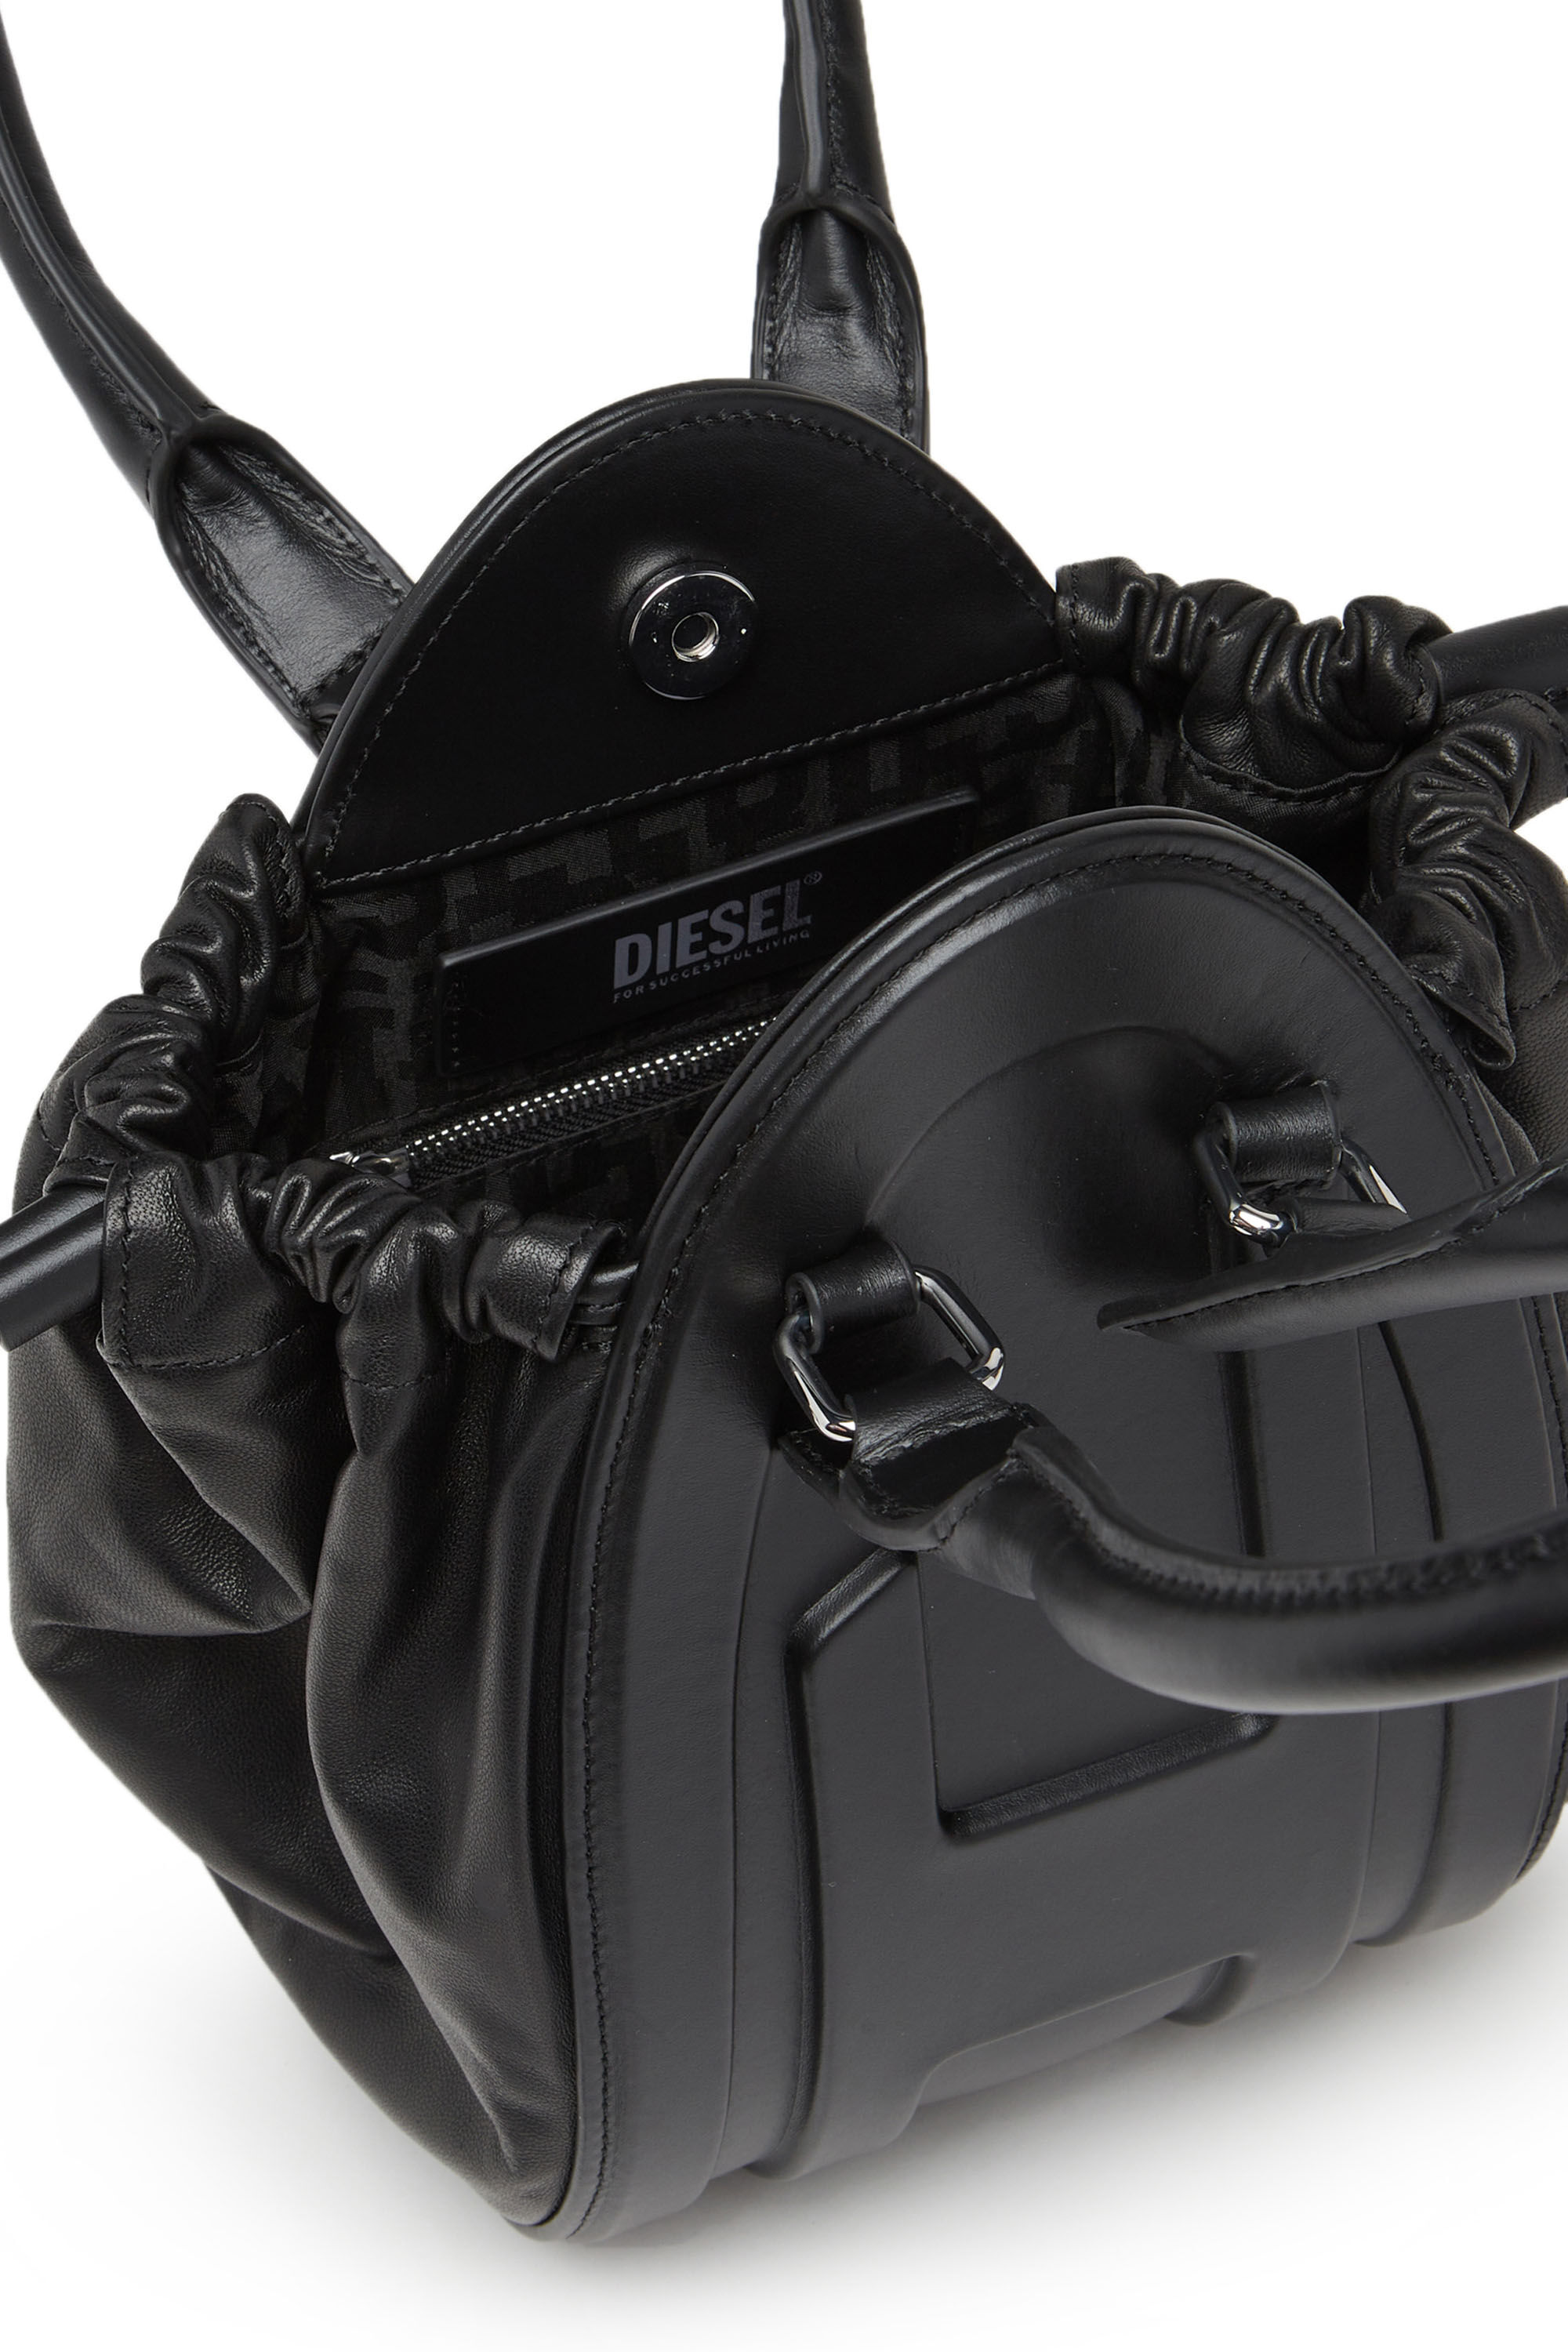 Diesel - 1DR-FOLD XS, Woman 1DR-Fold XS-Oval logo handbag in nappa leather in Black - Image 5